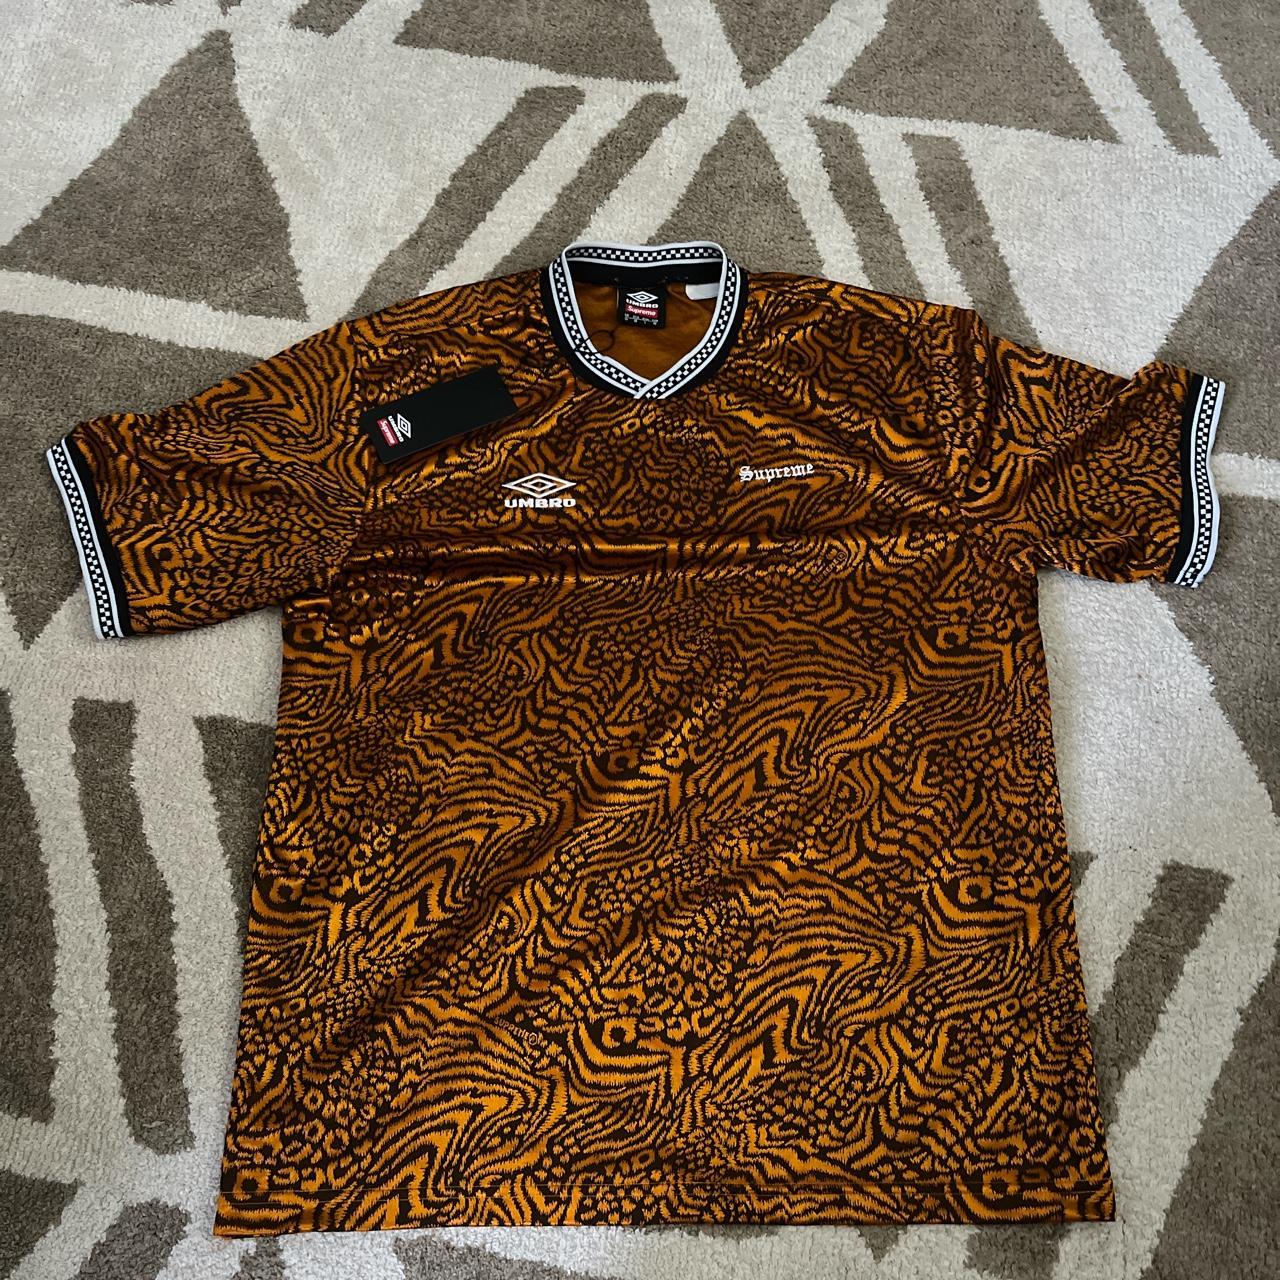 Supreme® / Umbro Jacquard Animal Print Soccer Jersey Poly jersey